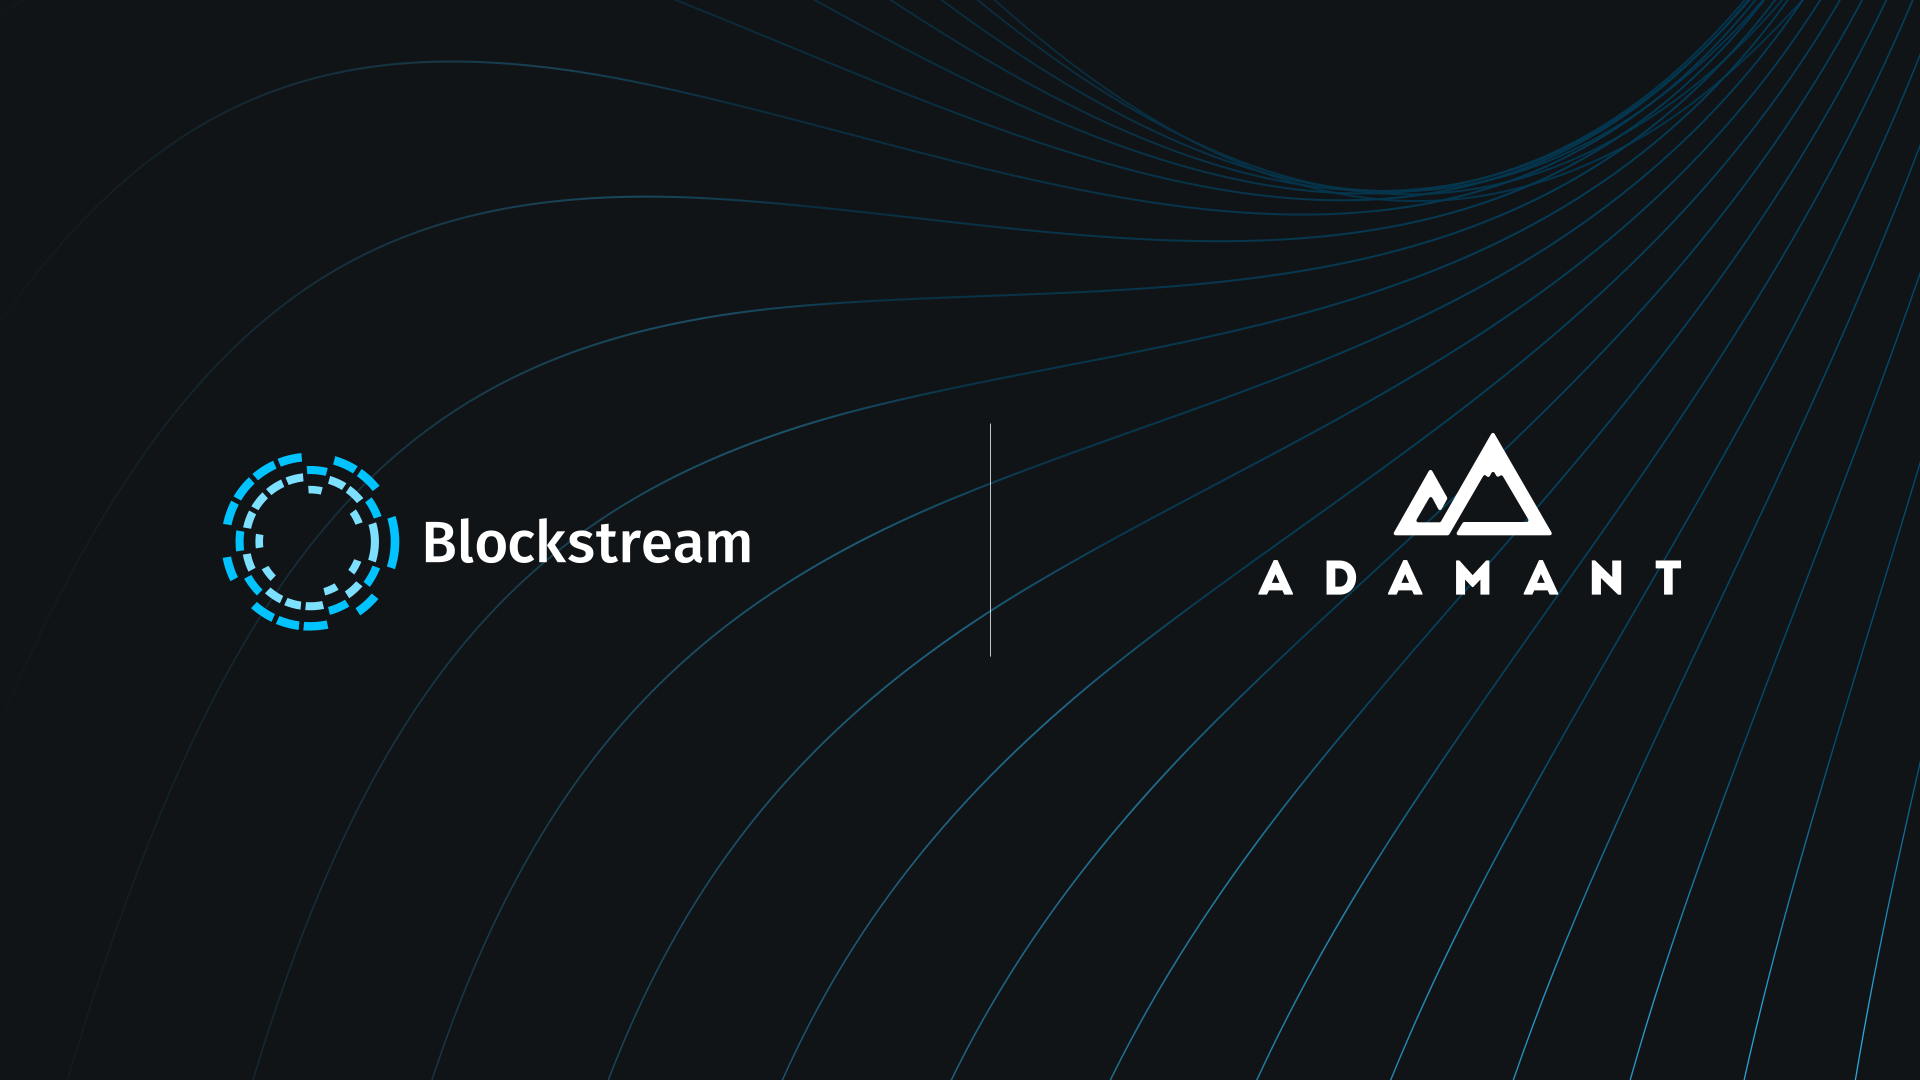 Blockstream Acquires Adamant Capital and Establishes Blockstream Finance